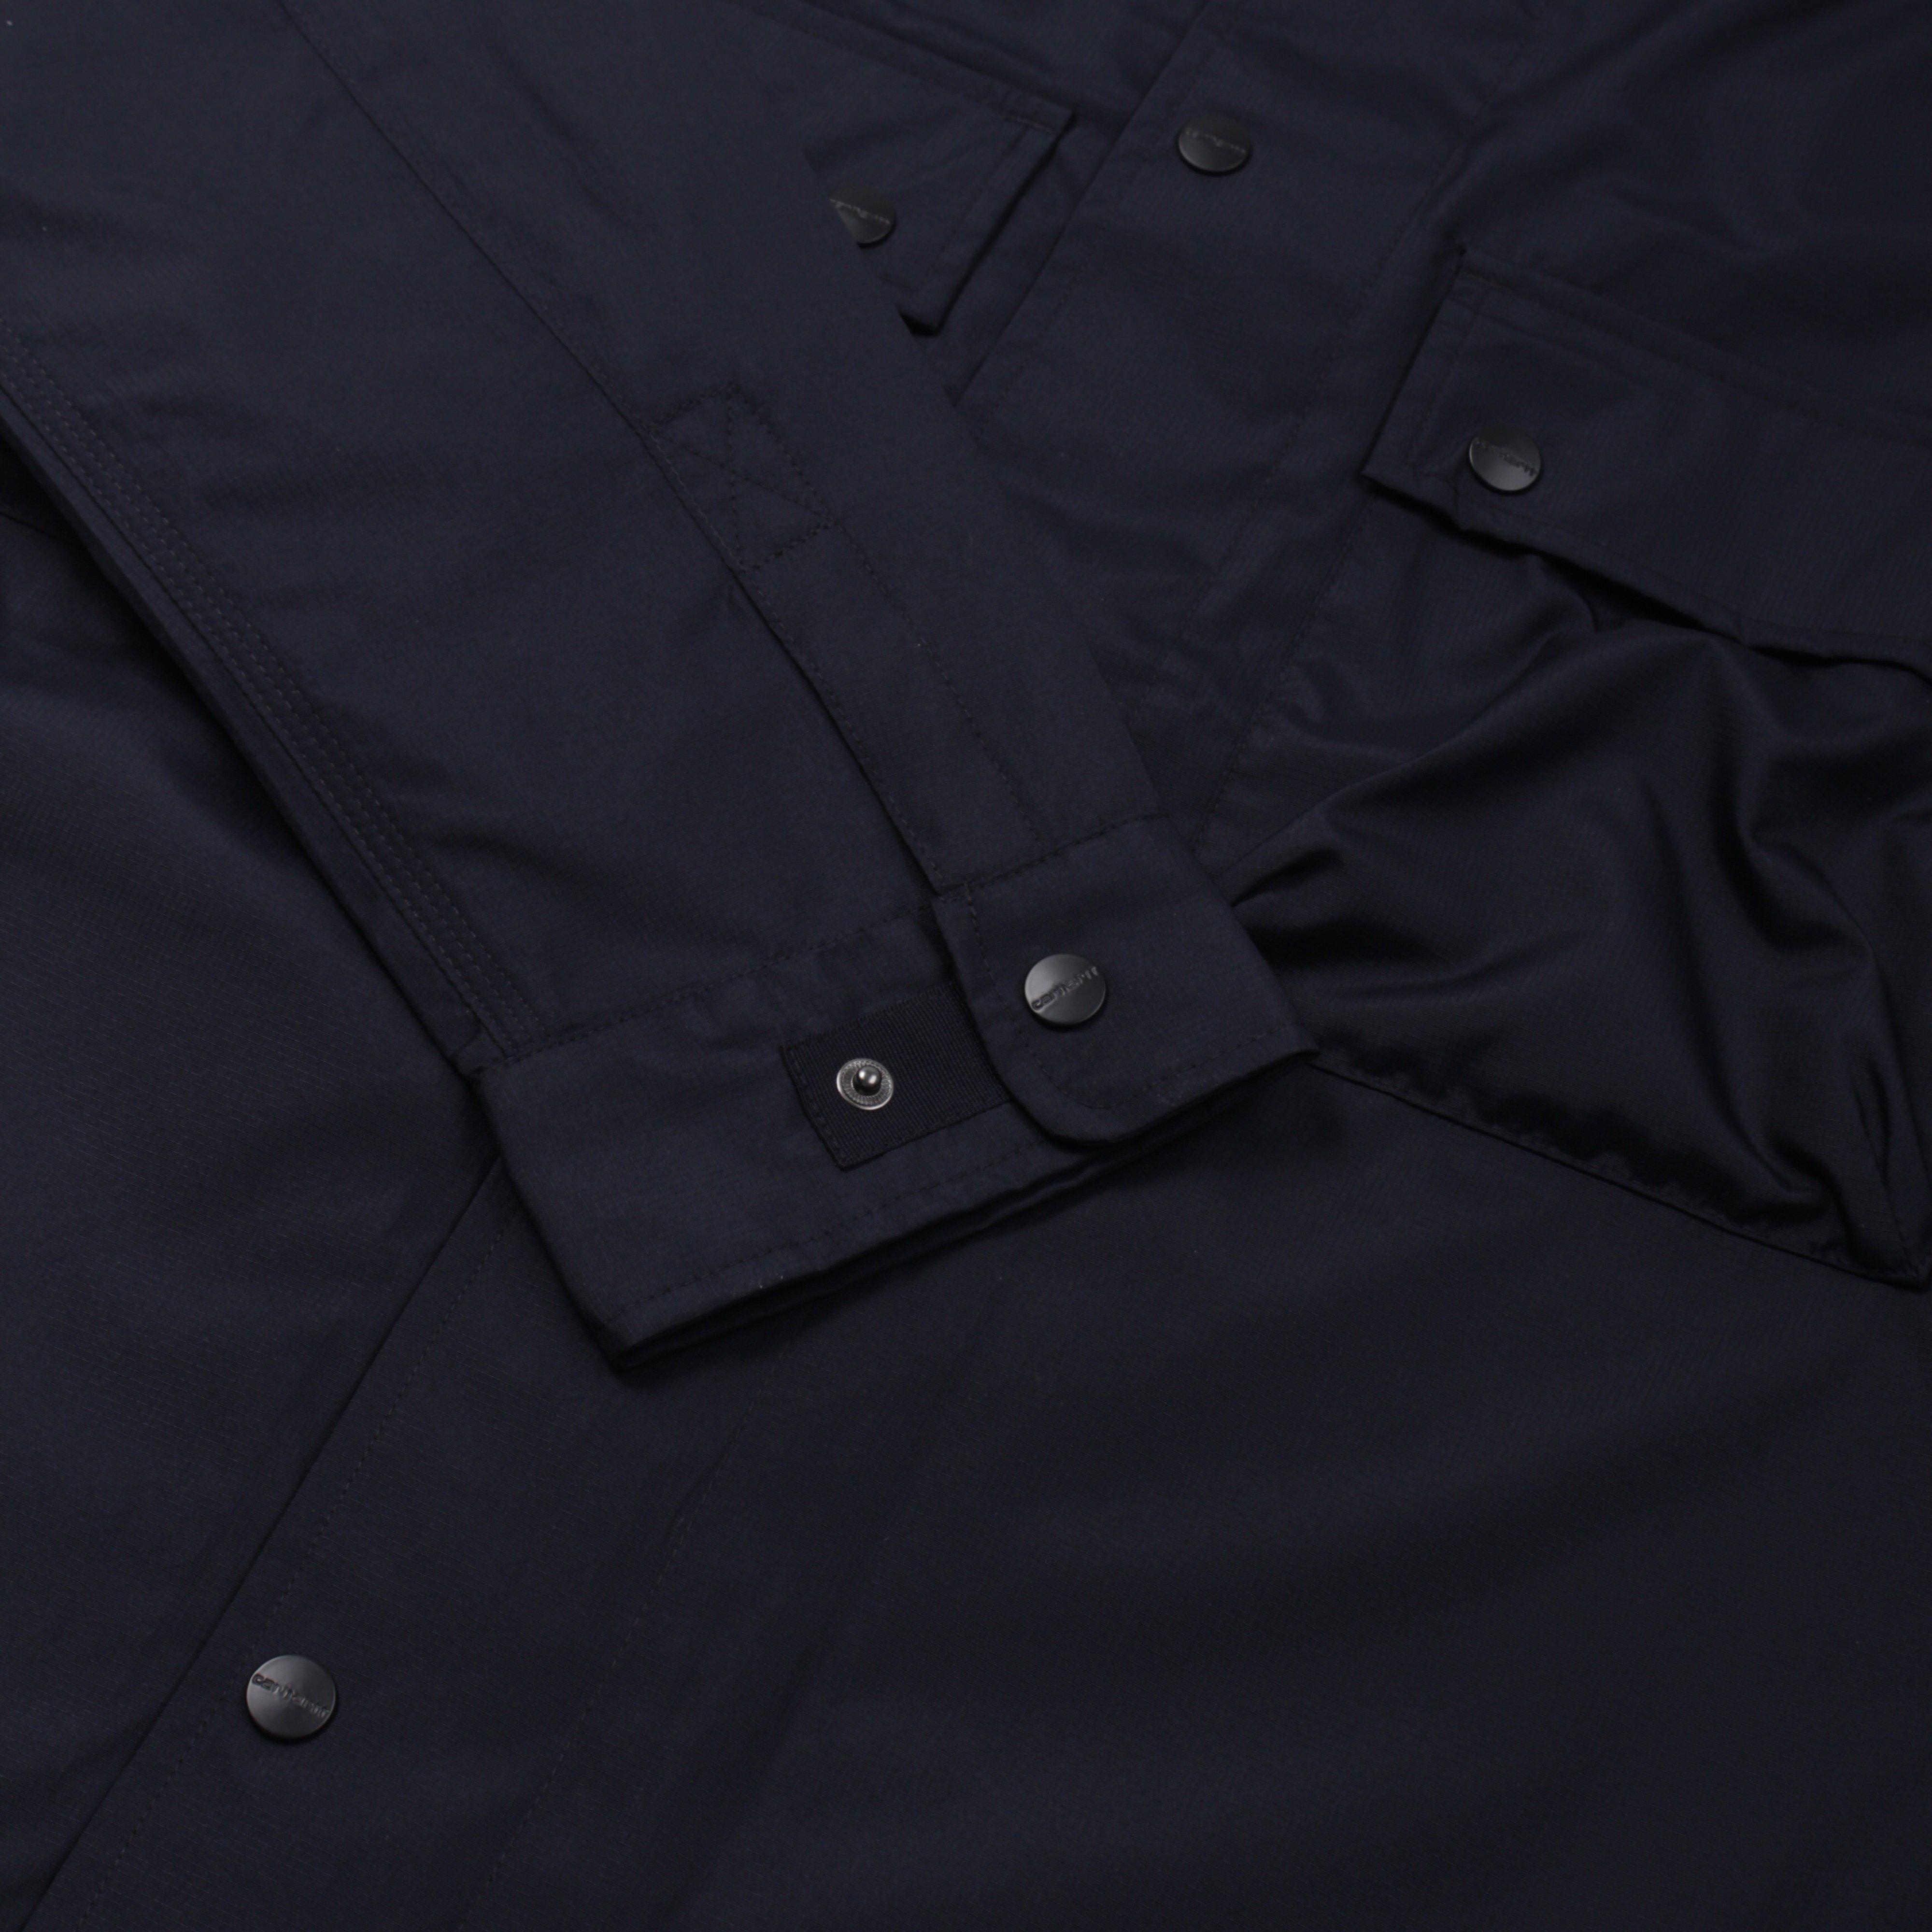 Carhartt WIP Fargo Shirt Jacket in Navy (Blue) for Men - Lyst